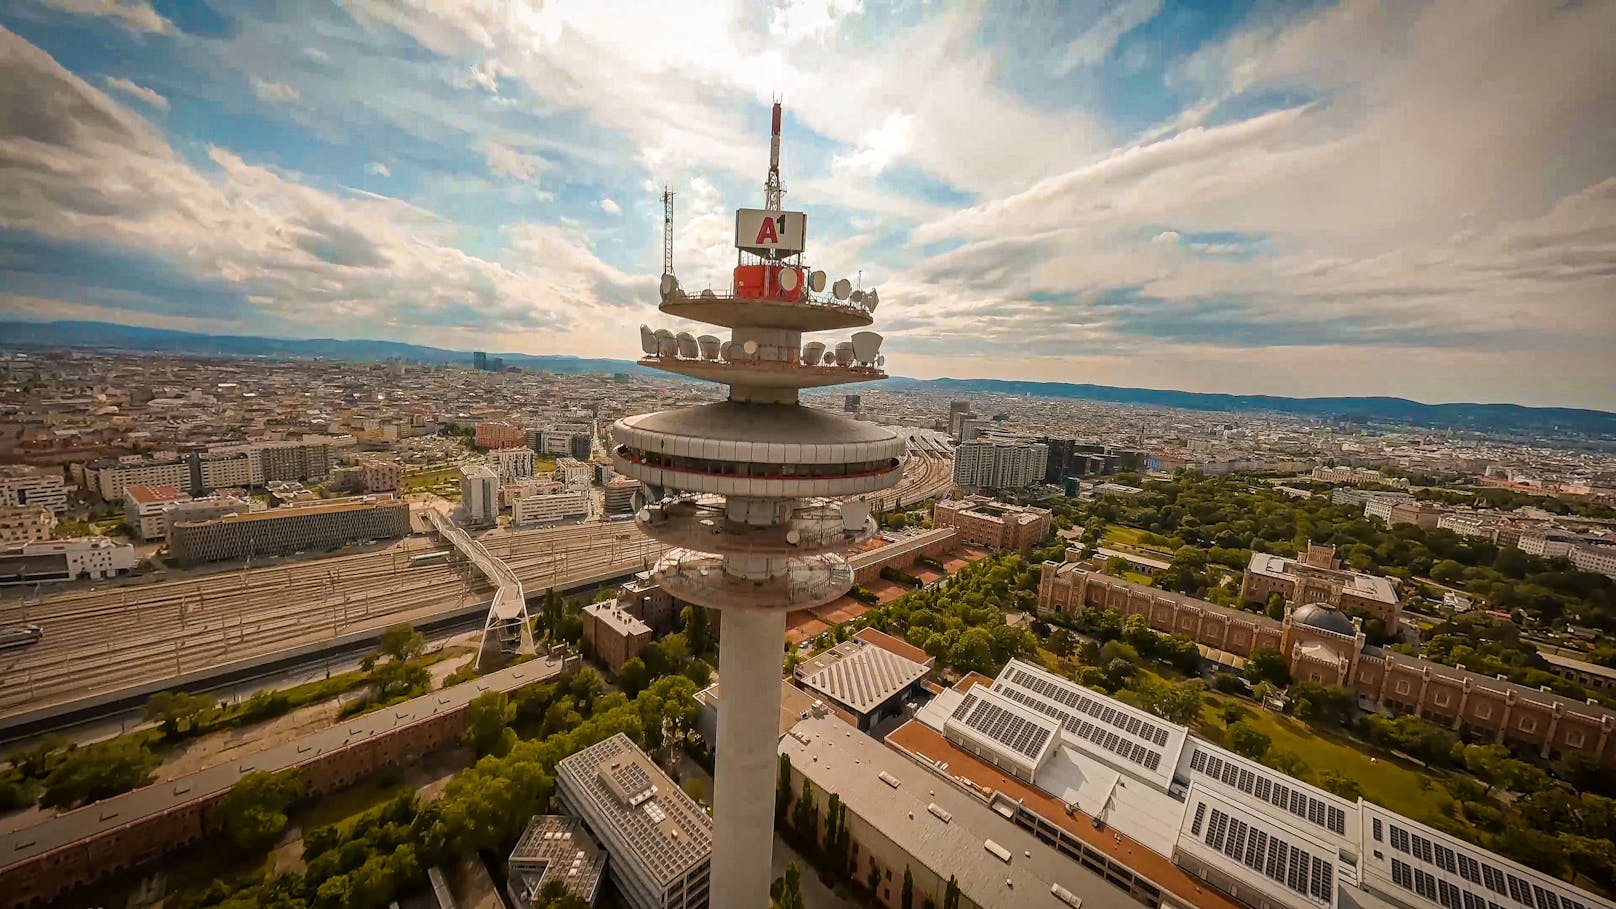 Der Arsenalturm - Funkturm der A1 Telekom